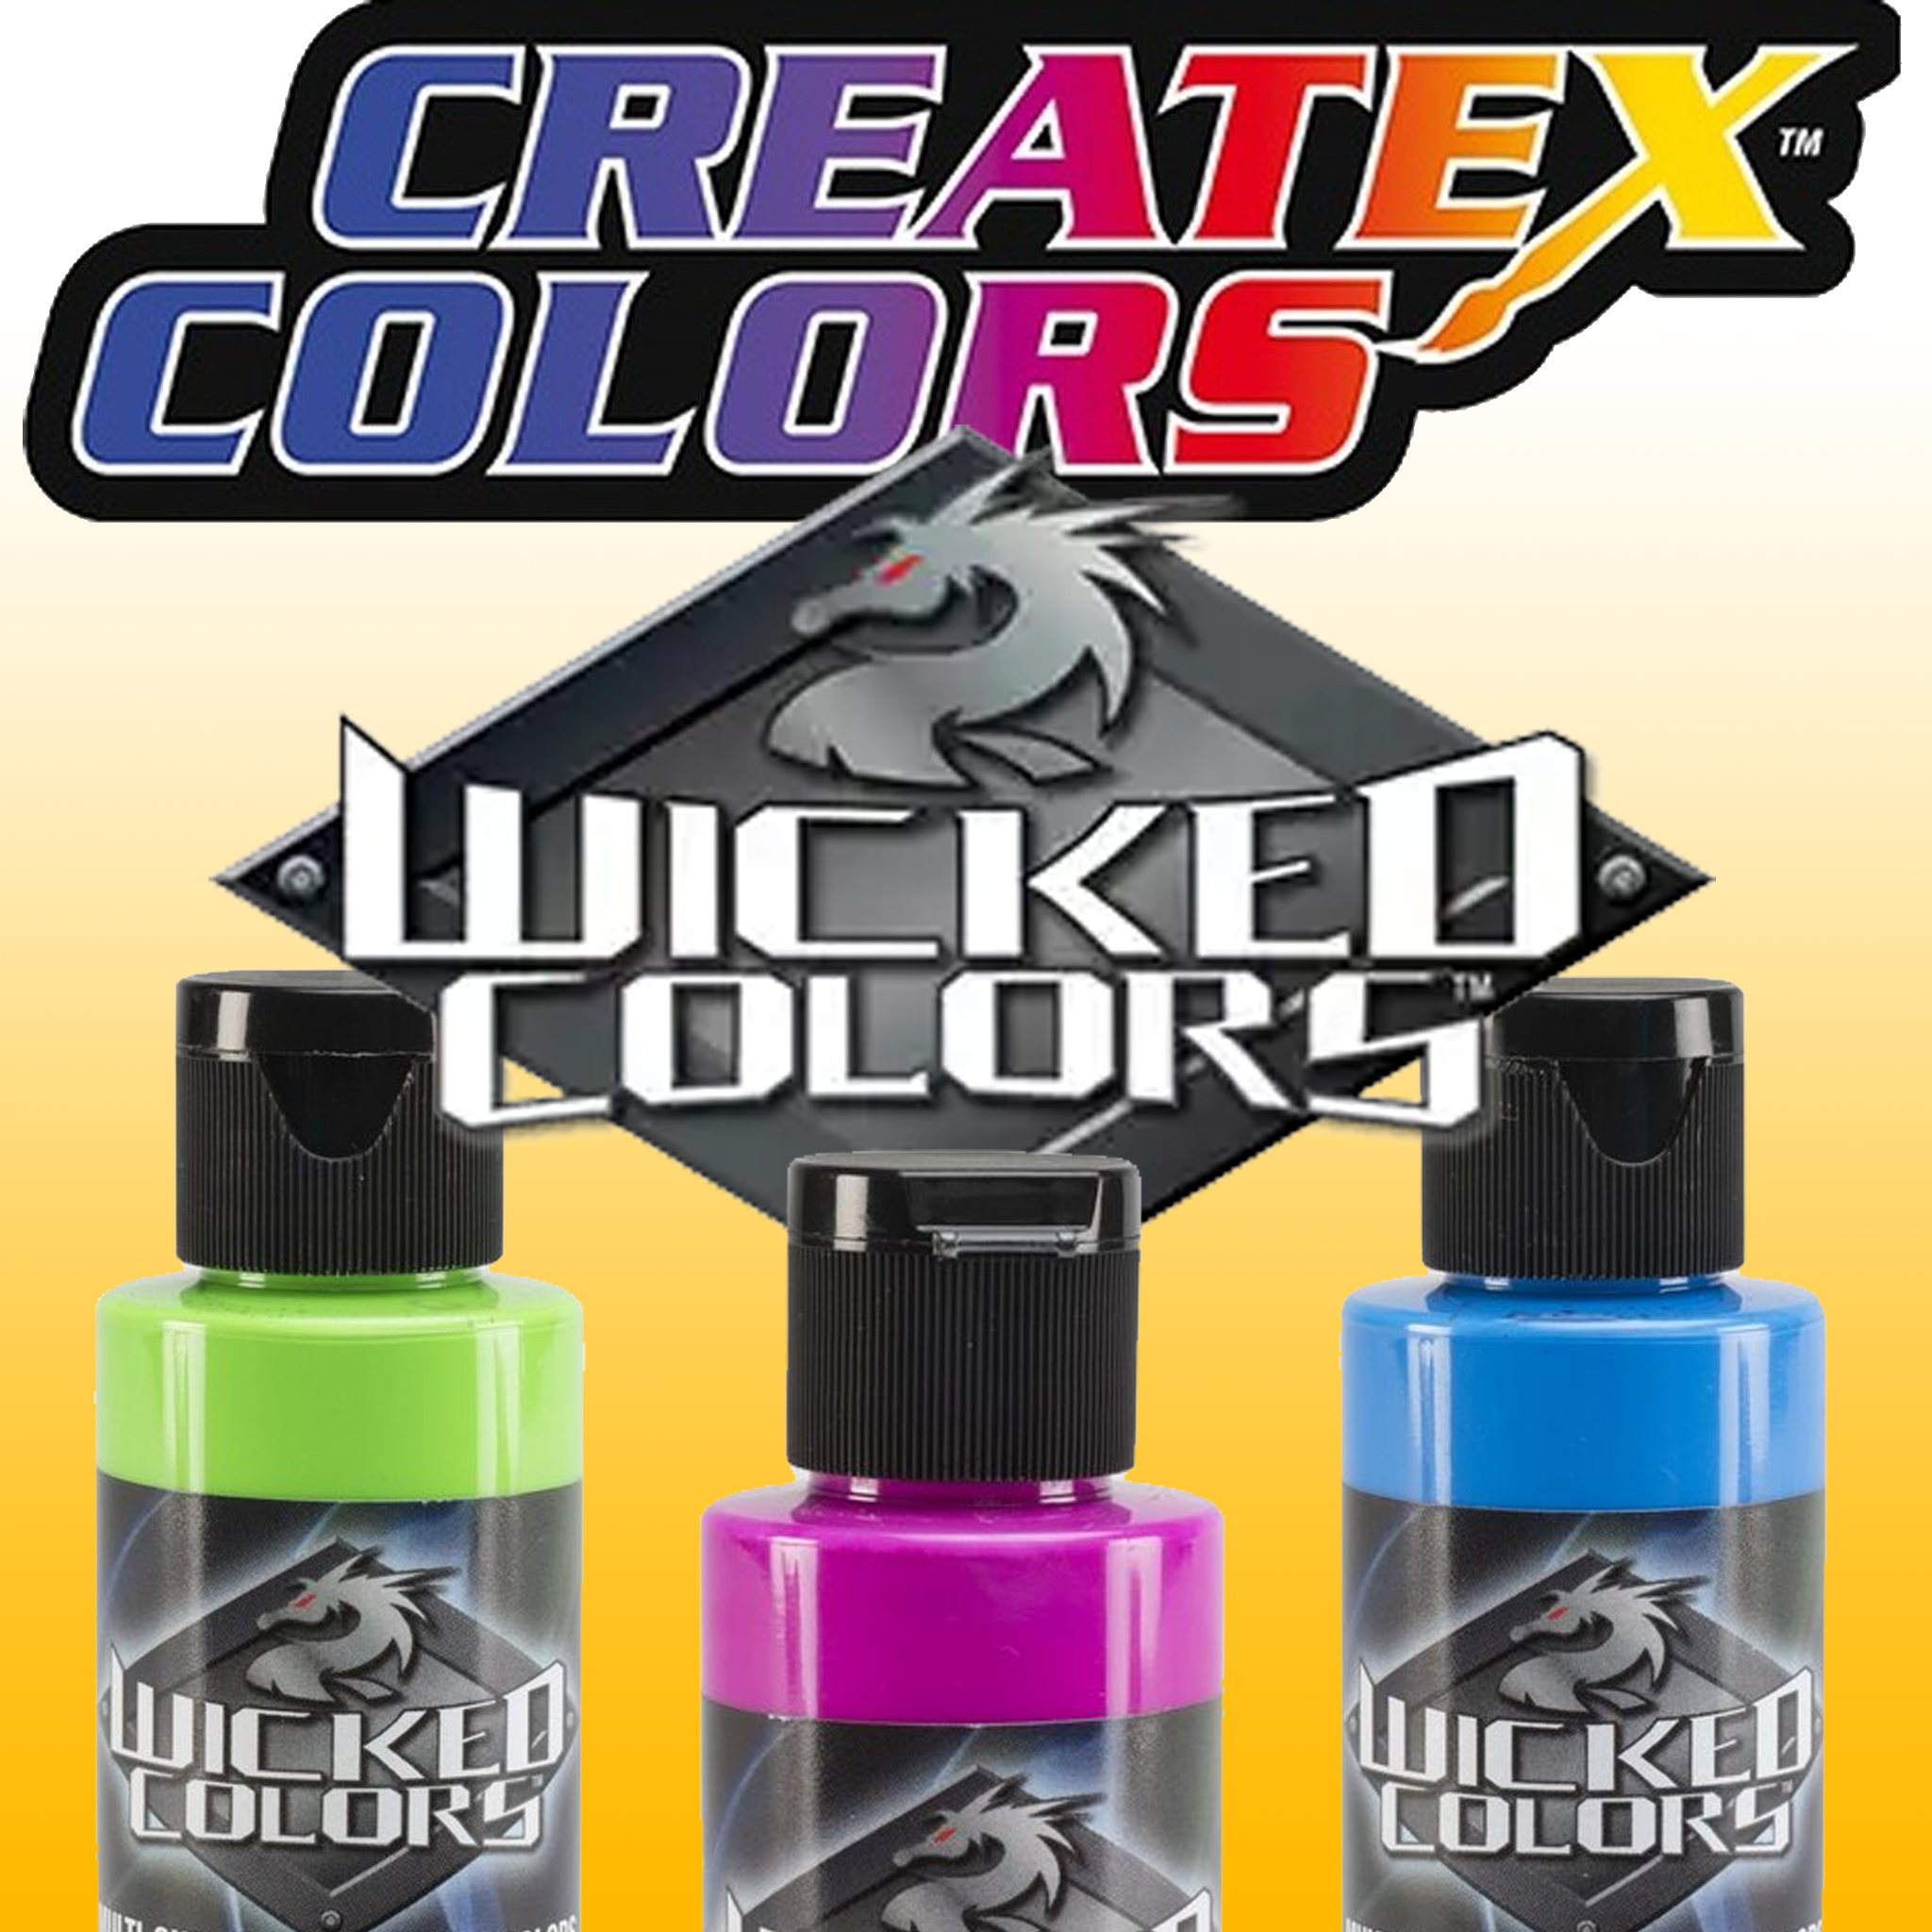 Createx Wicked Colors Fluorescent Set, 2 oz.: Anest Iwata-Medea, Inc.